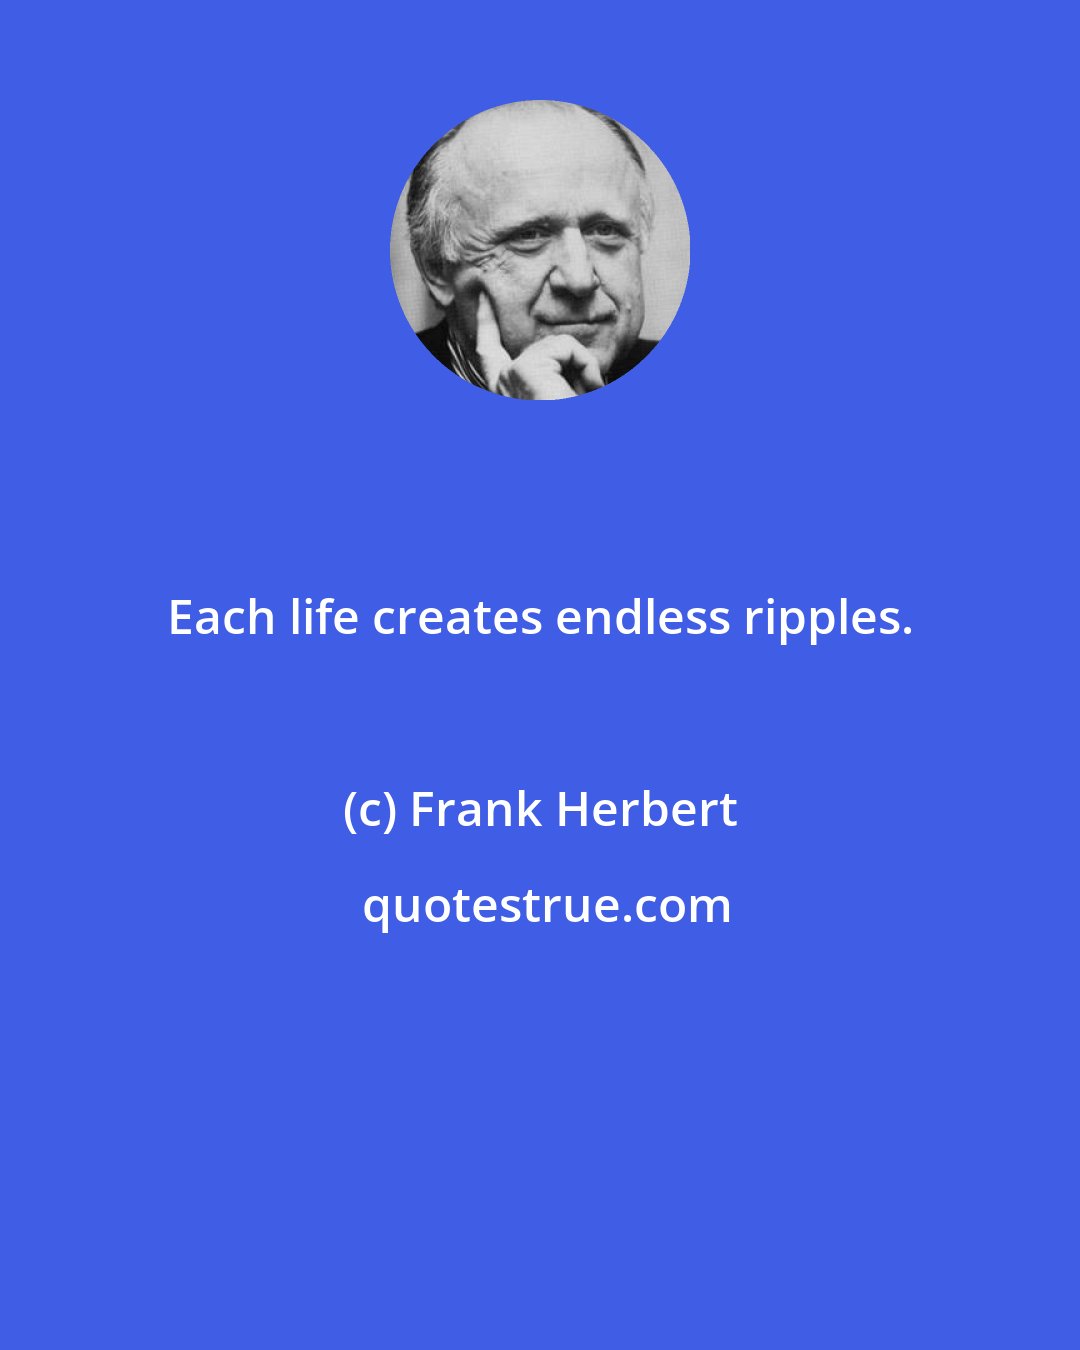 Frank Herbert: Each life creates endless ripples.